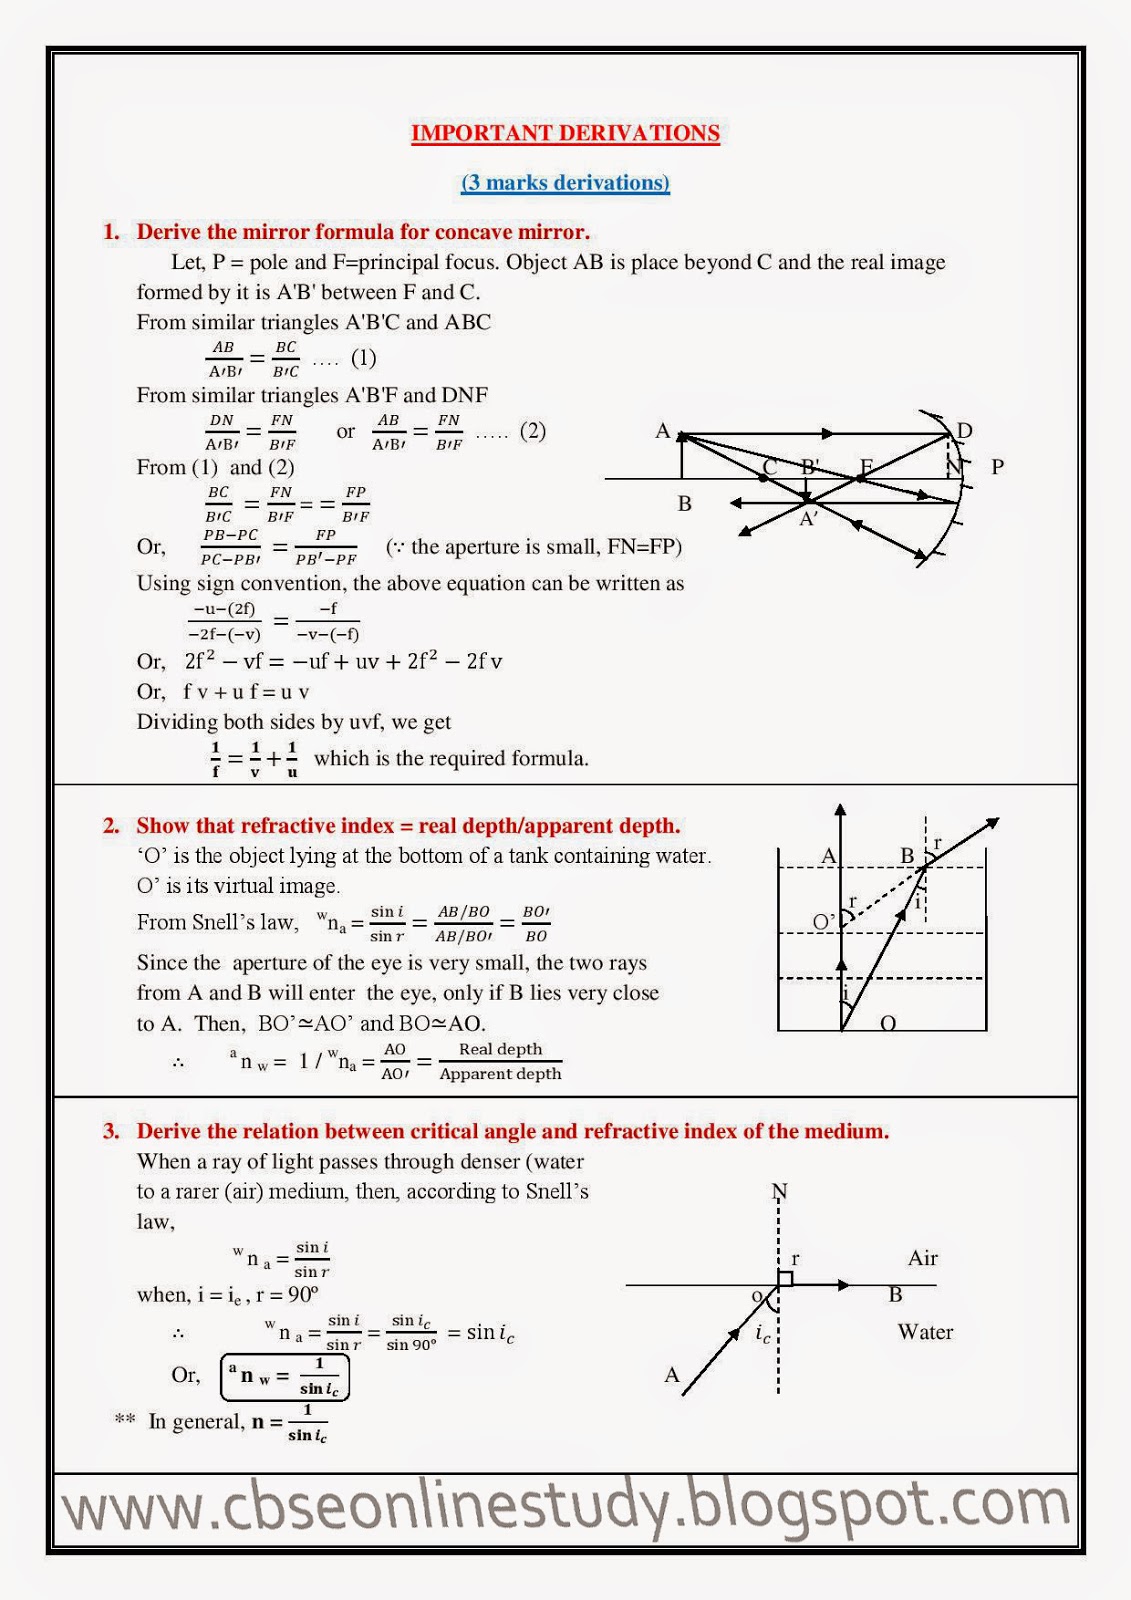 derivations in physics class 12 cbse pdf 395